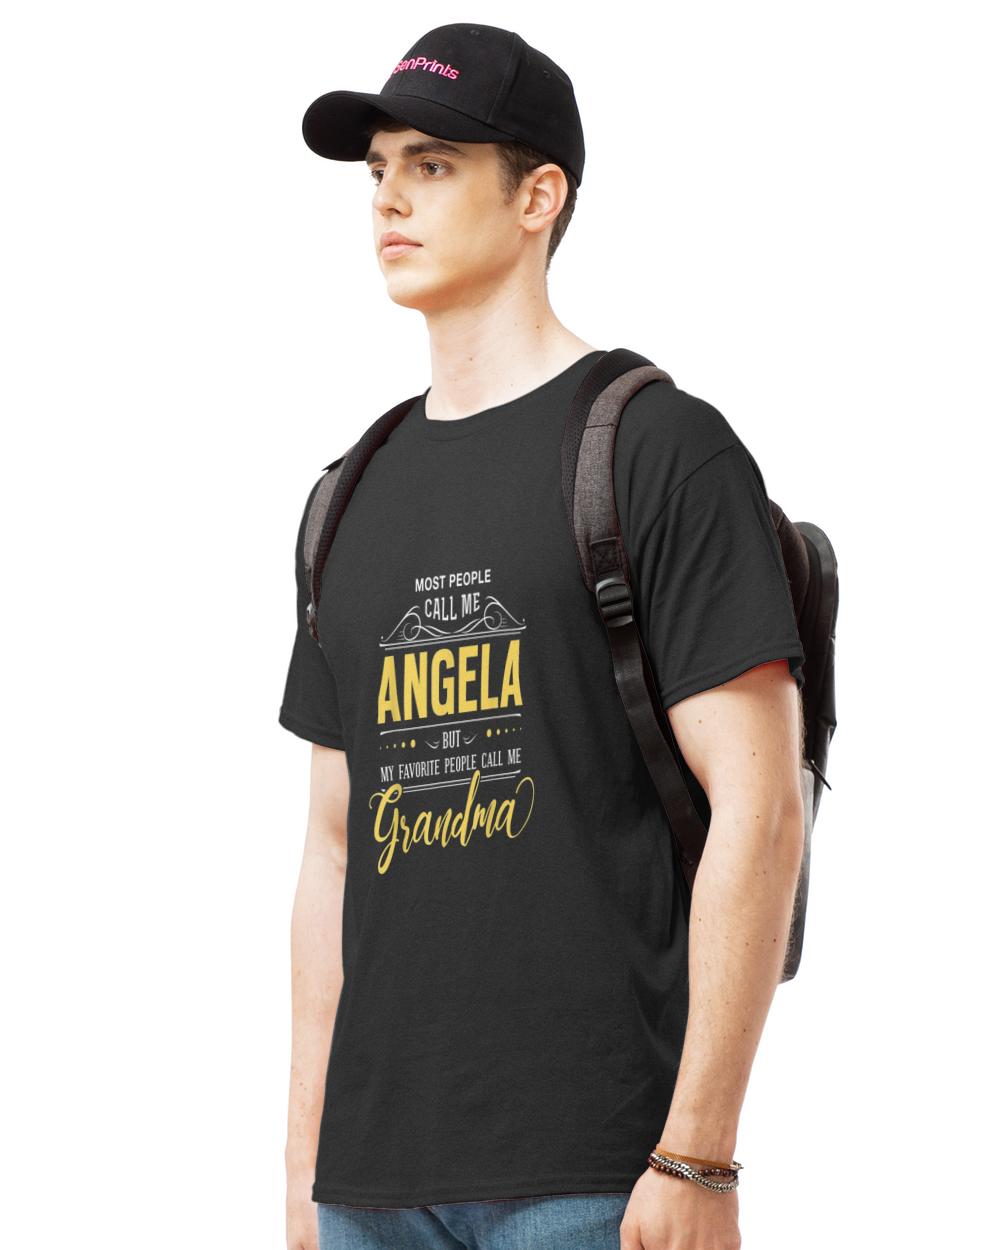 New angela name my favorite people call me grandma  t-shirt